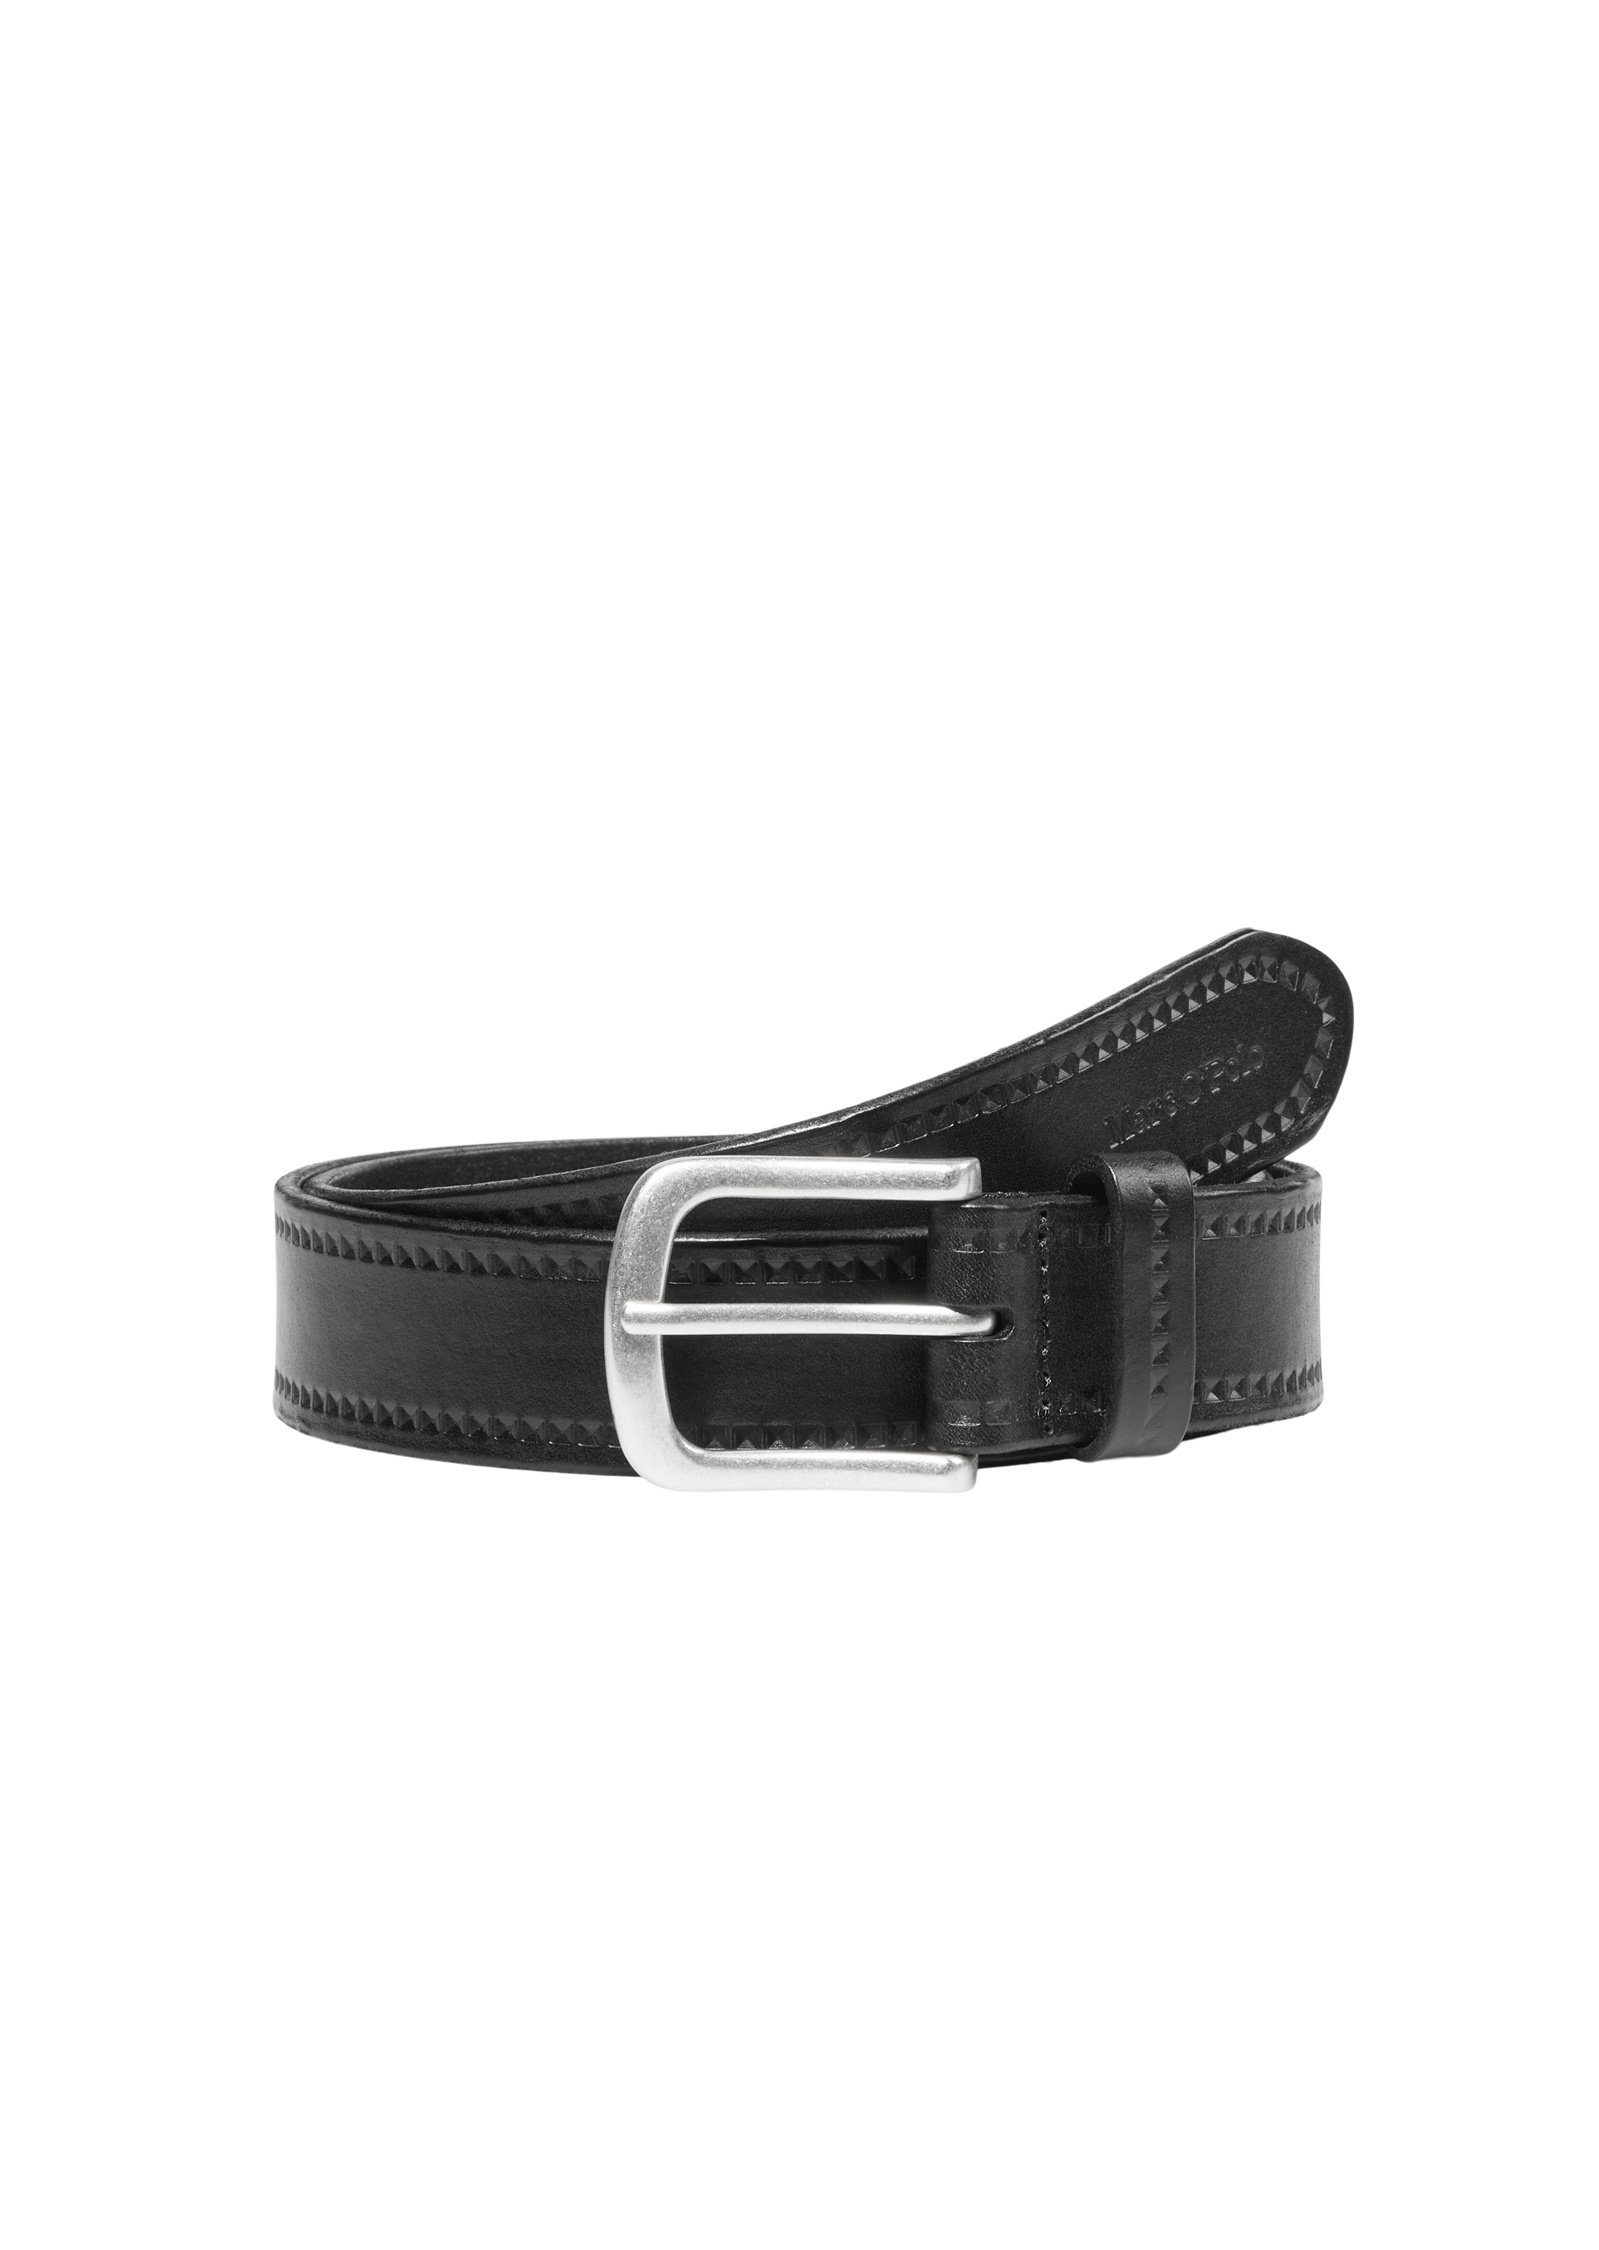 Marc O'Polo Ledergürtel mit gebürsteter Metall-Schließe schwarz | Gürtel